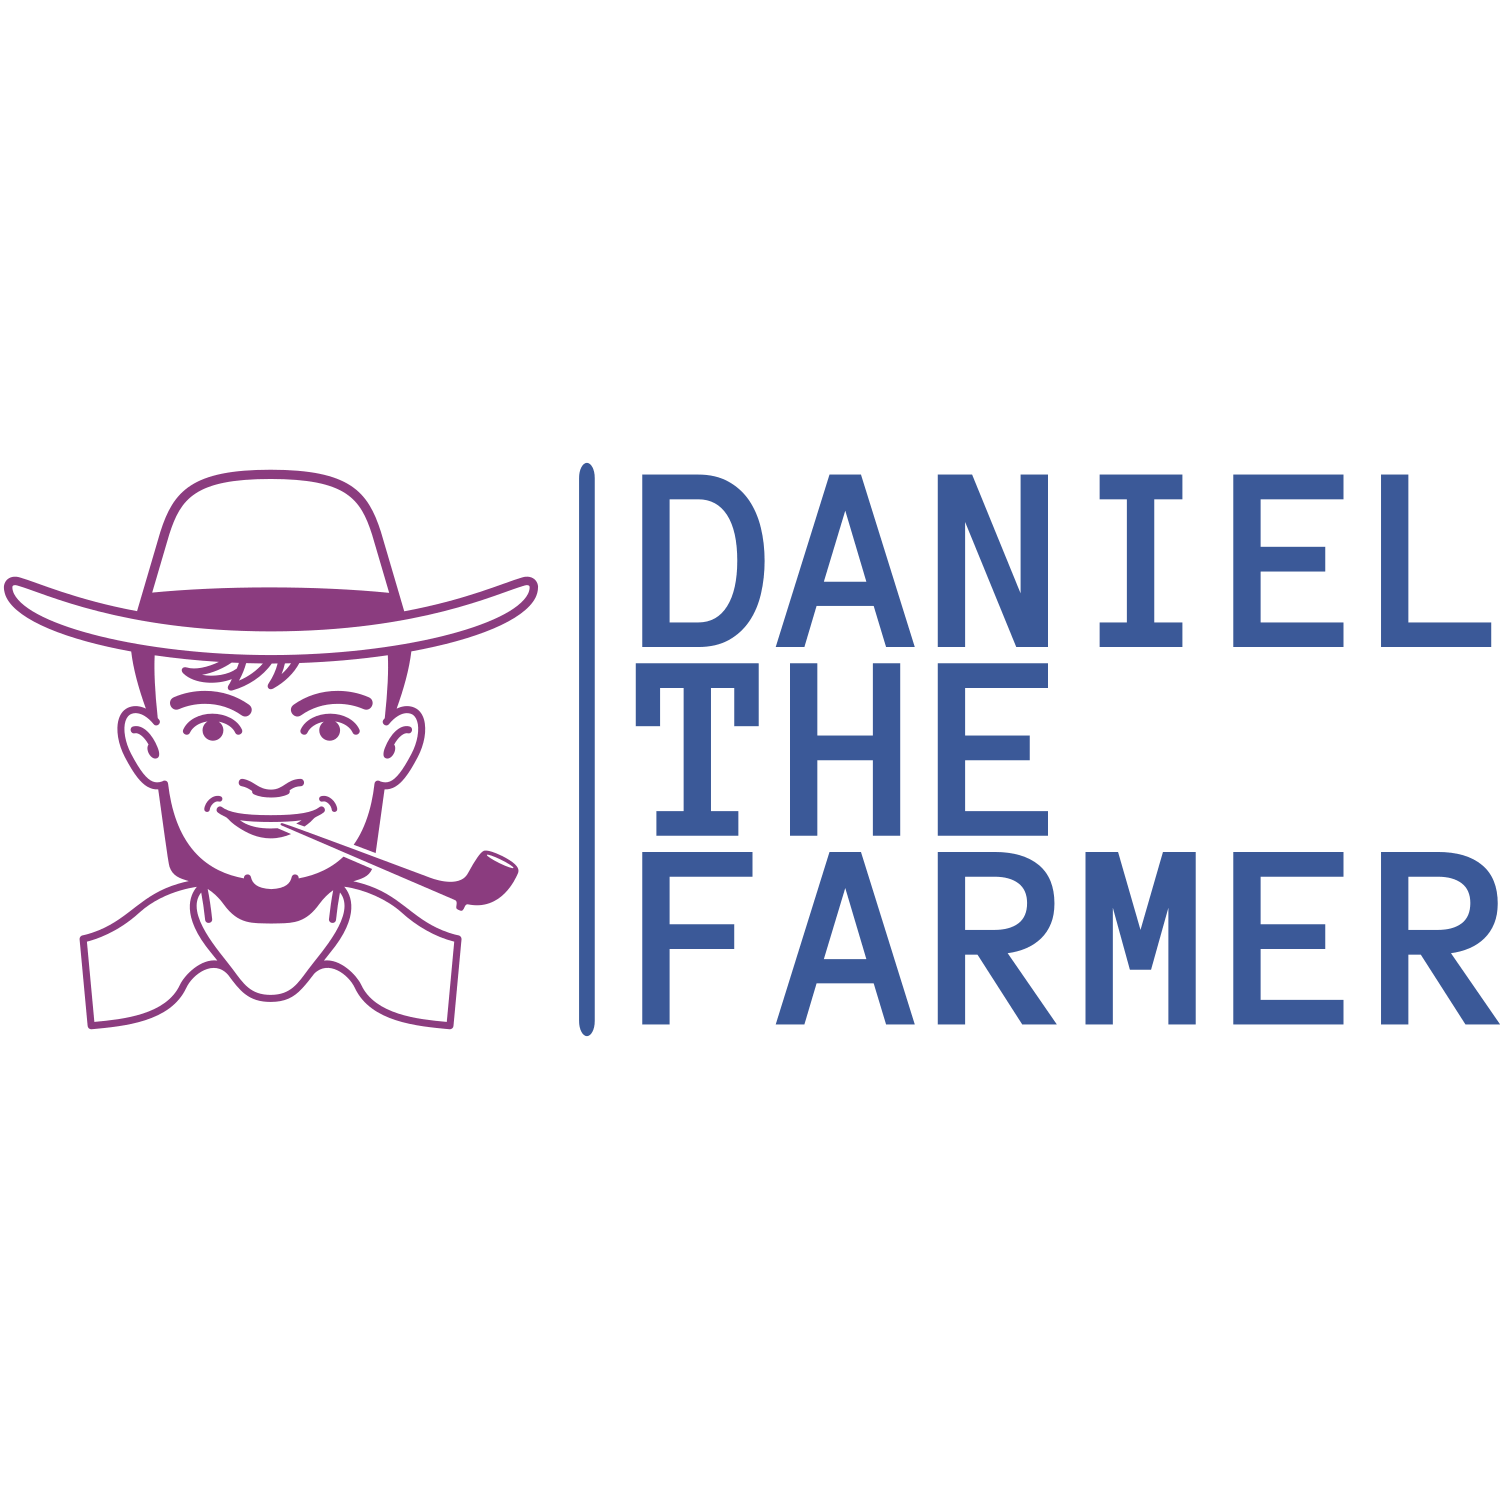 Daniel The Farmer